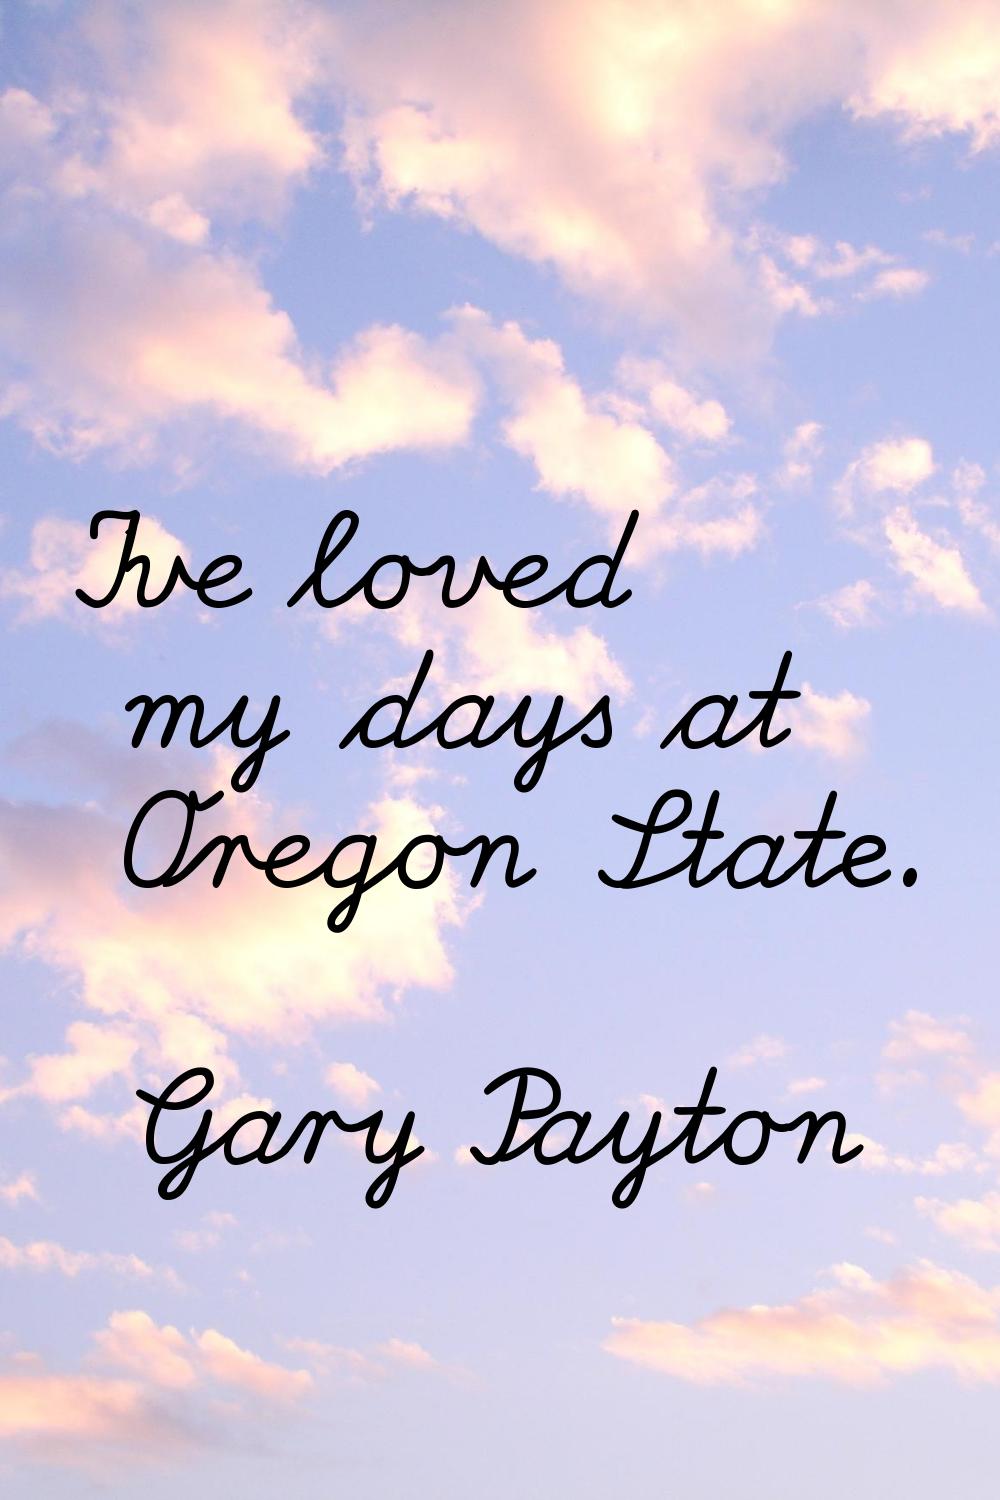 I've loved my days at Oregon State.